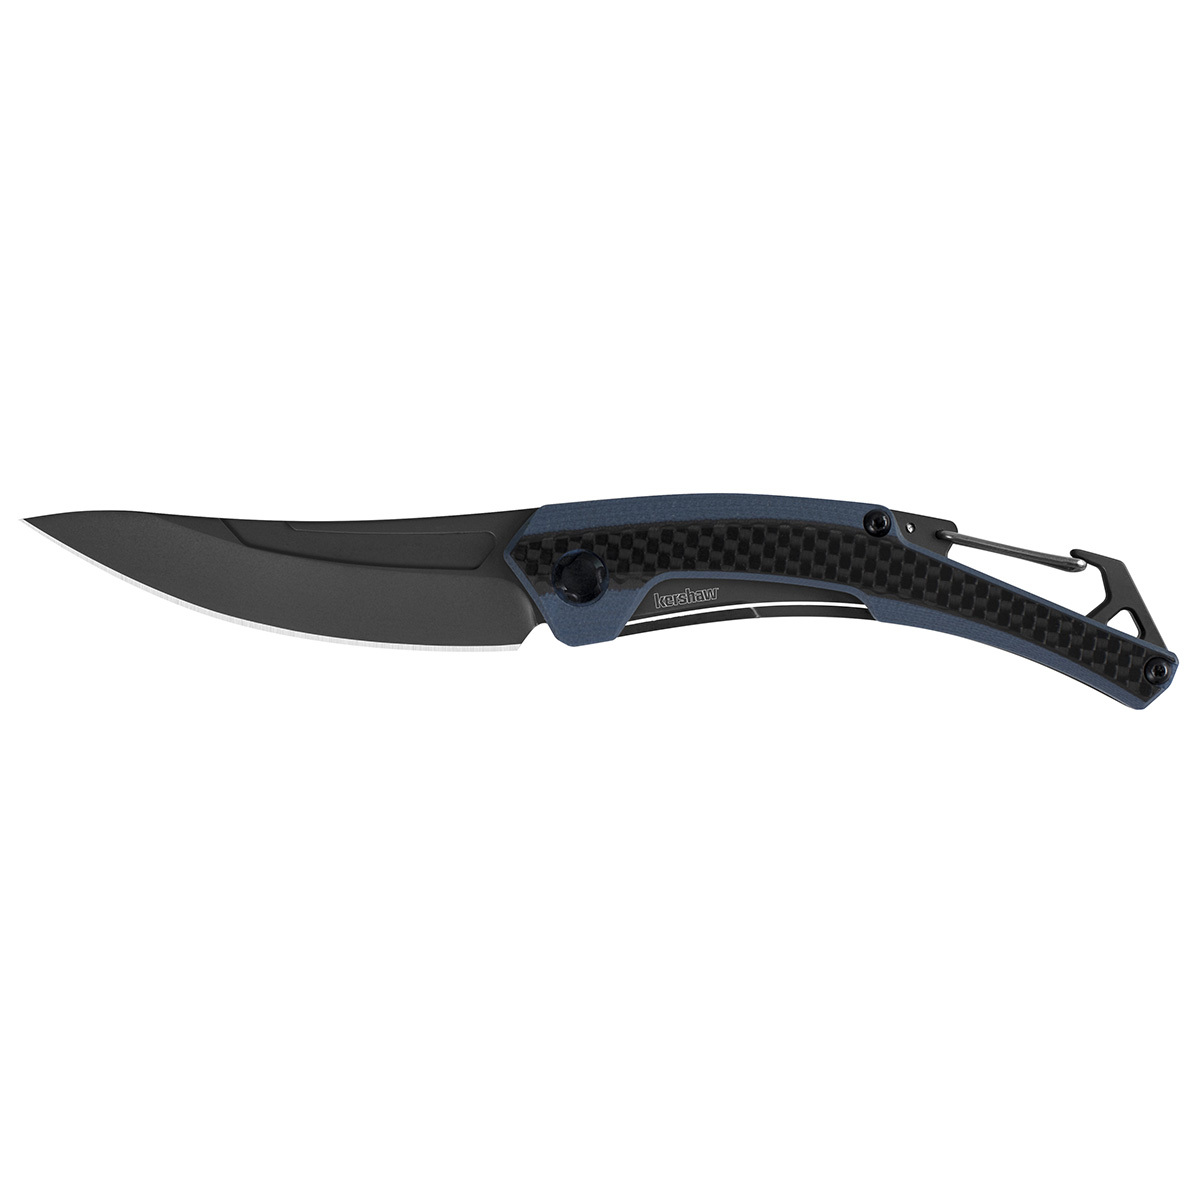 Складной нож Kershaw Reverb XL K1225, сталь 8Cr13MoV складной нож зажим sanrenmu 6014 сталь 8cr13mov